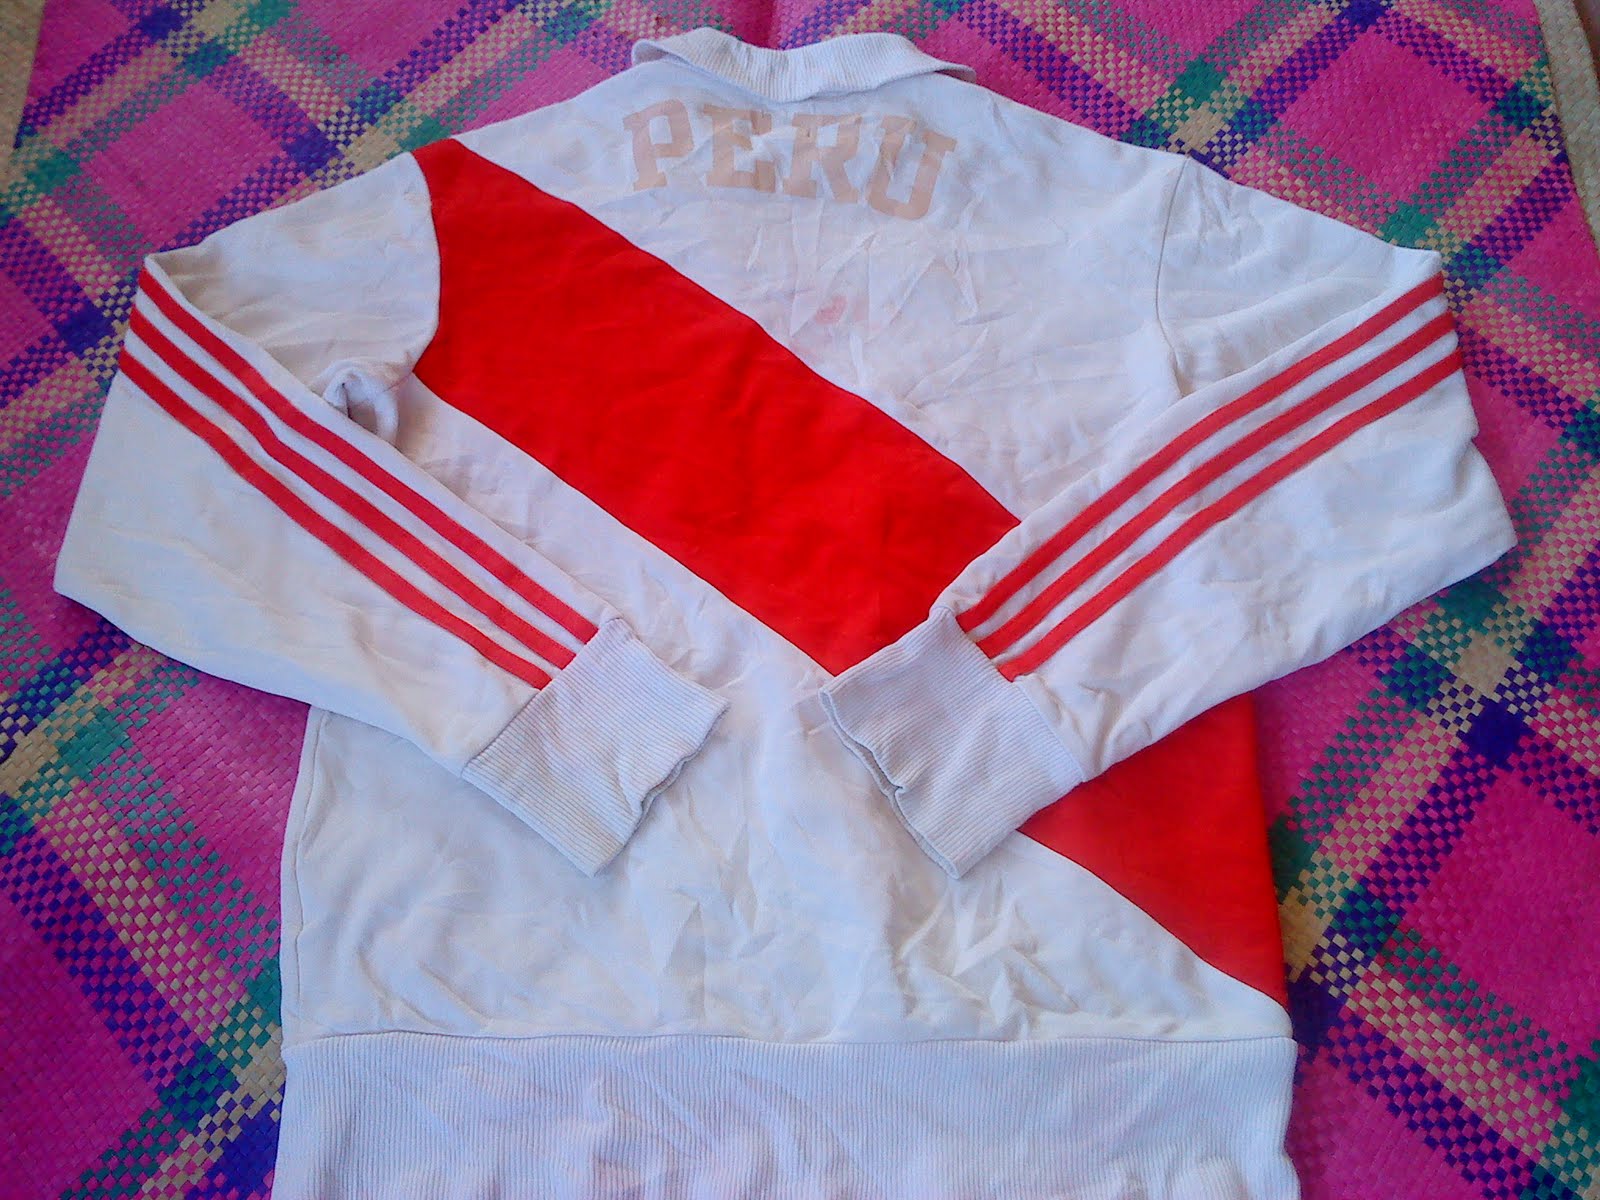 Adidas Peru